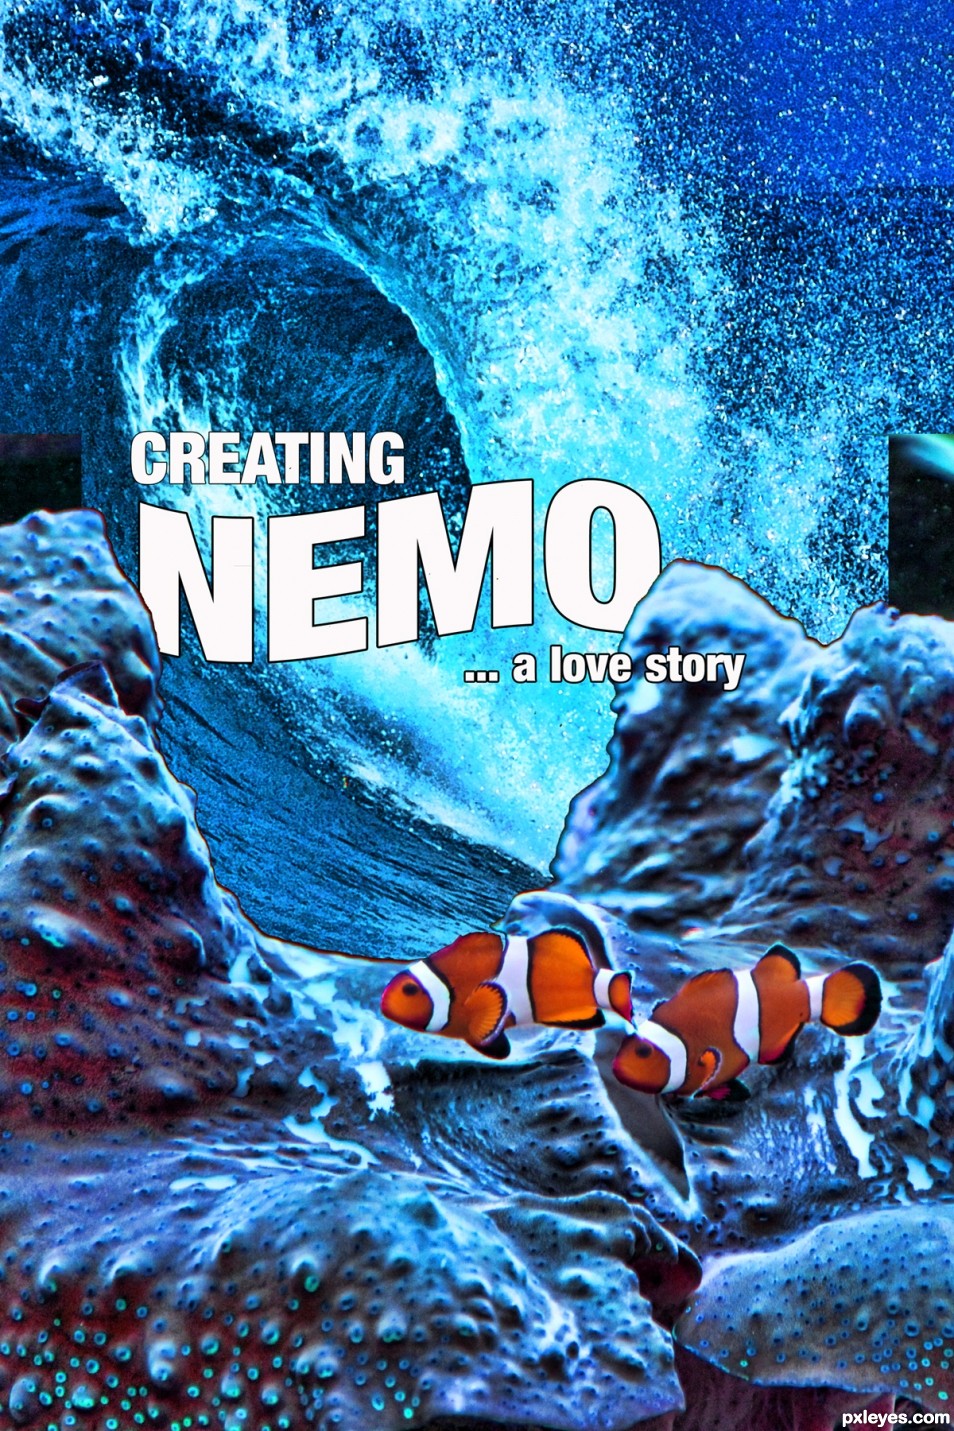 Prequel to Finding Nemo